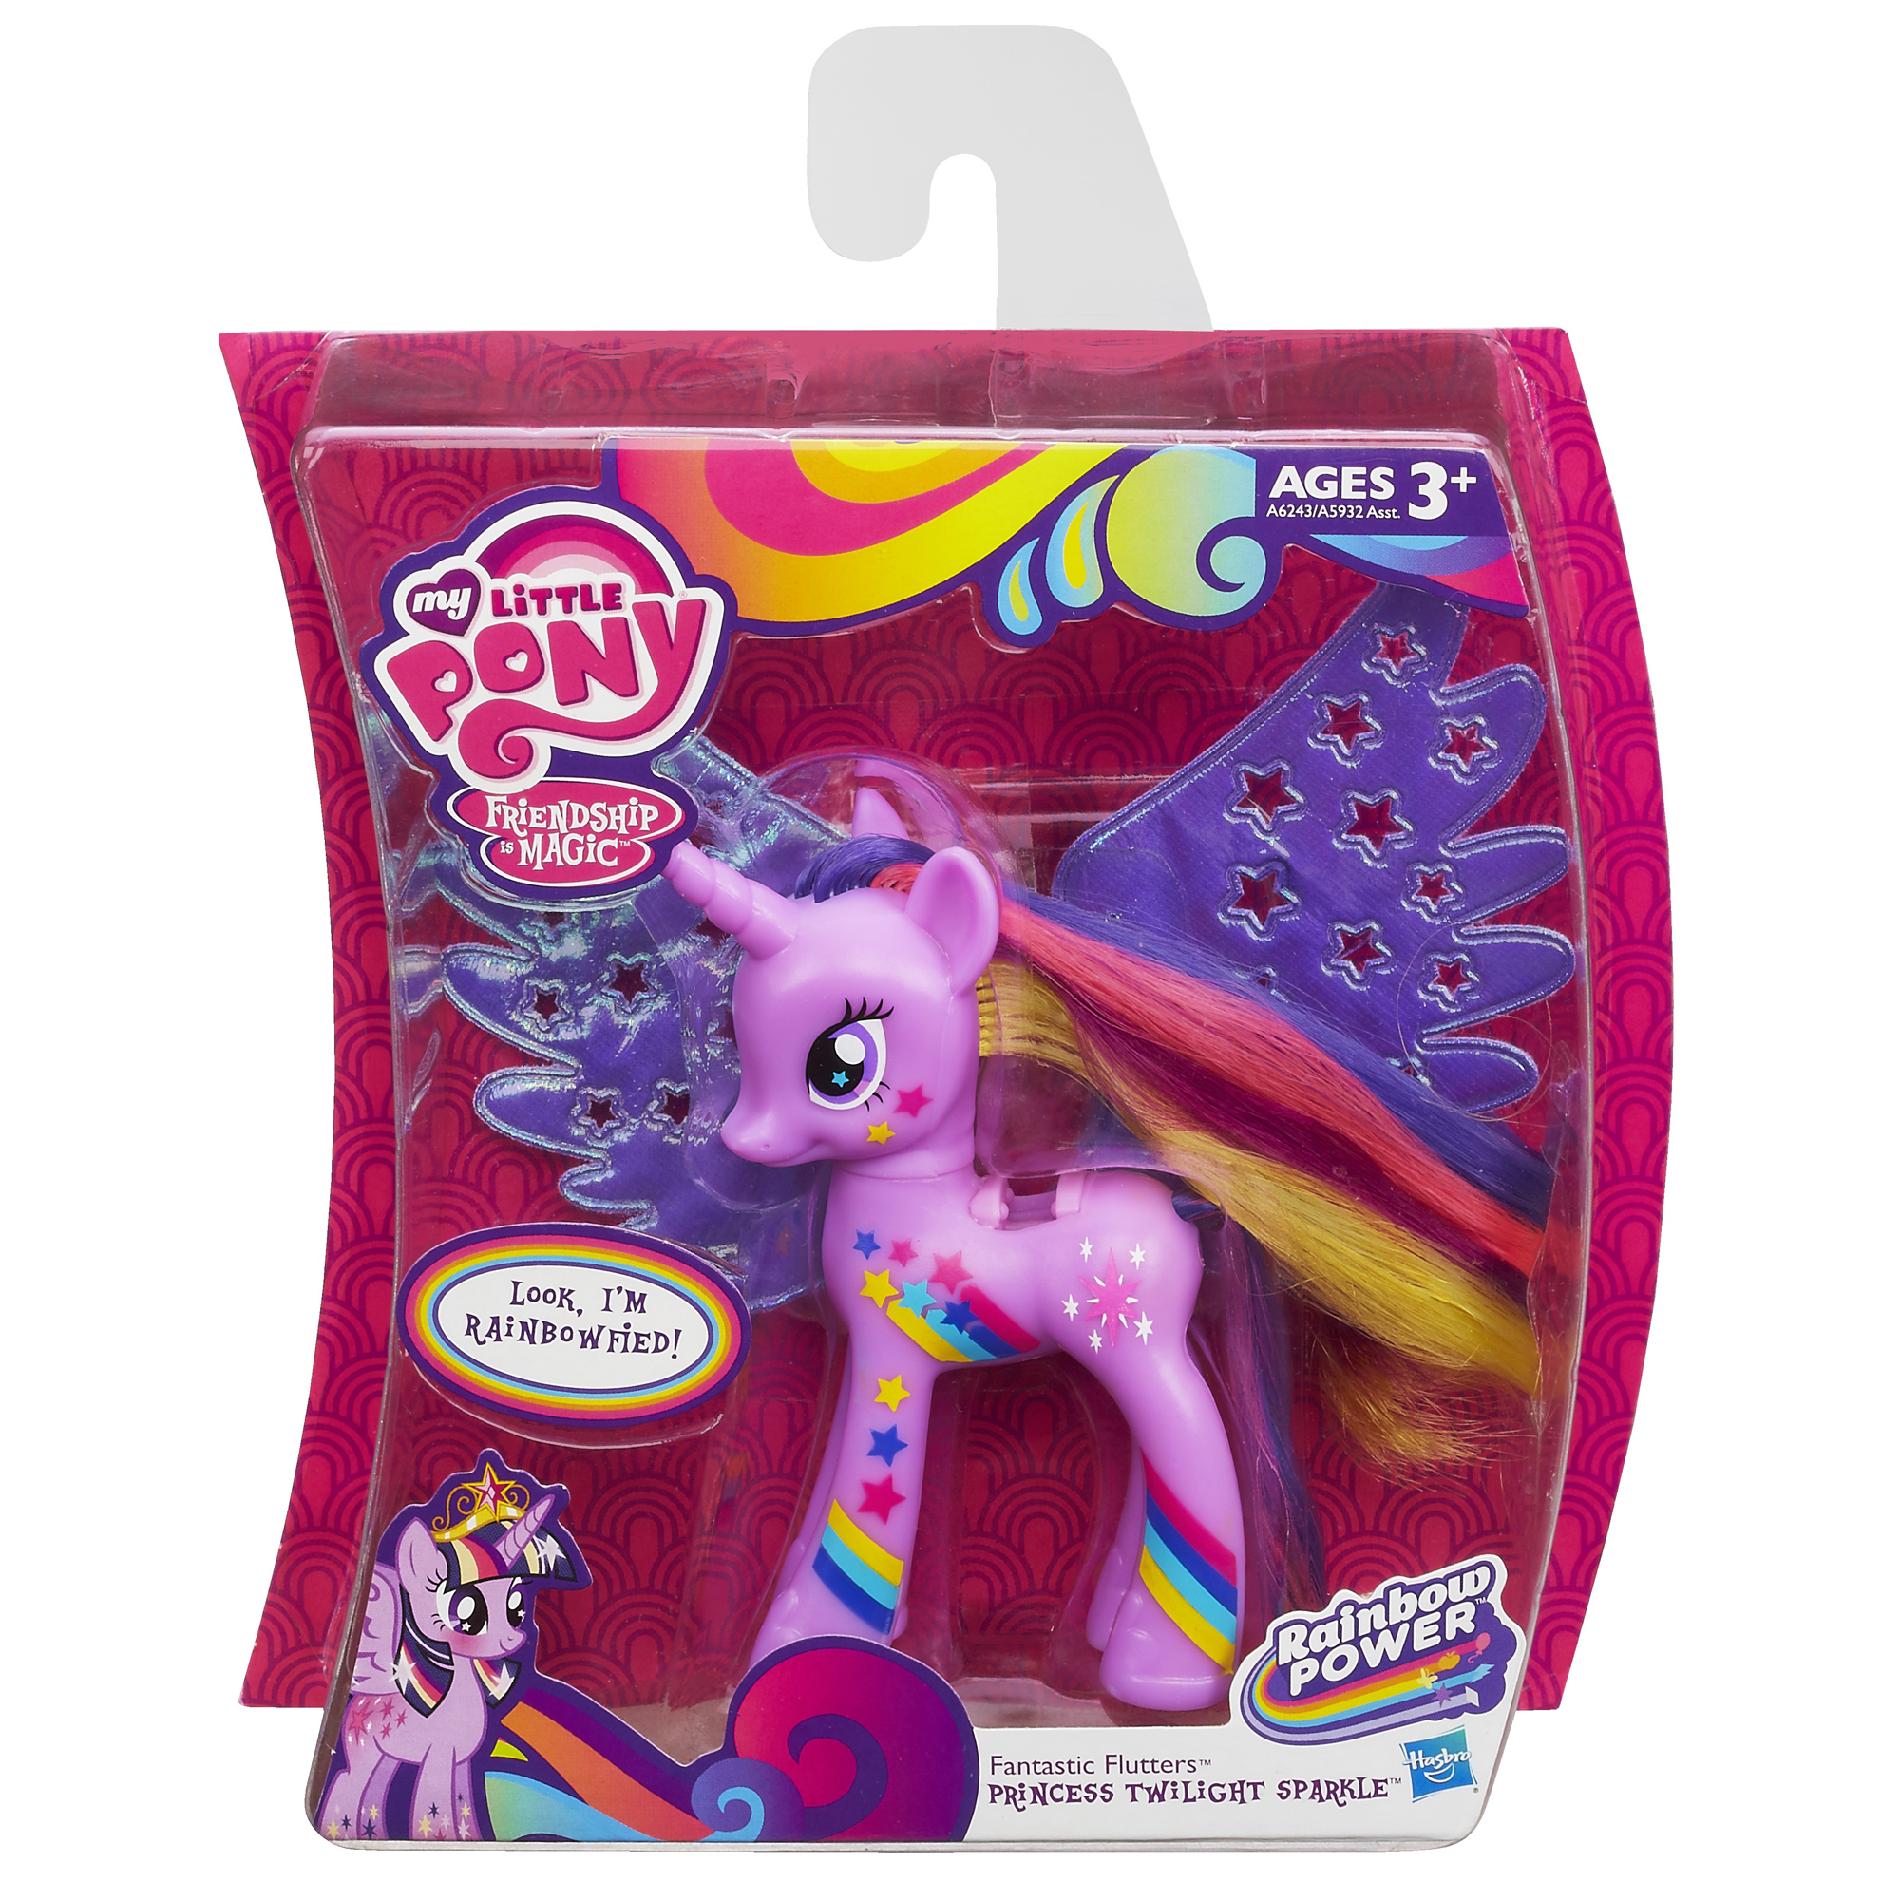 My Little Pony Fantastic Flutters Princess Twilight Sparkle Pony